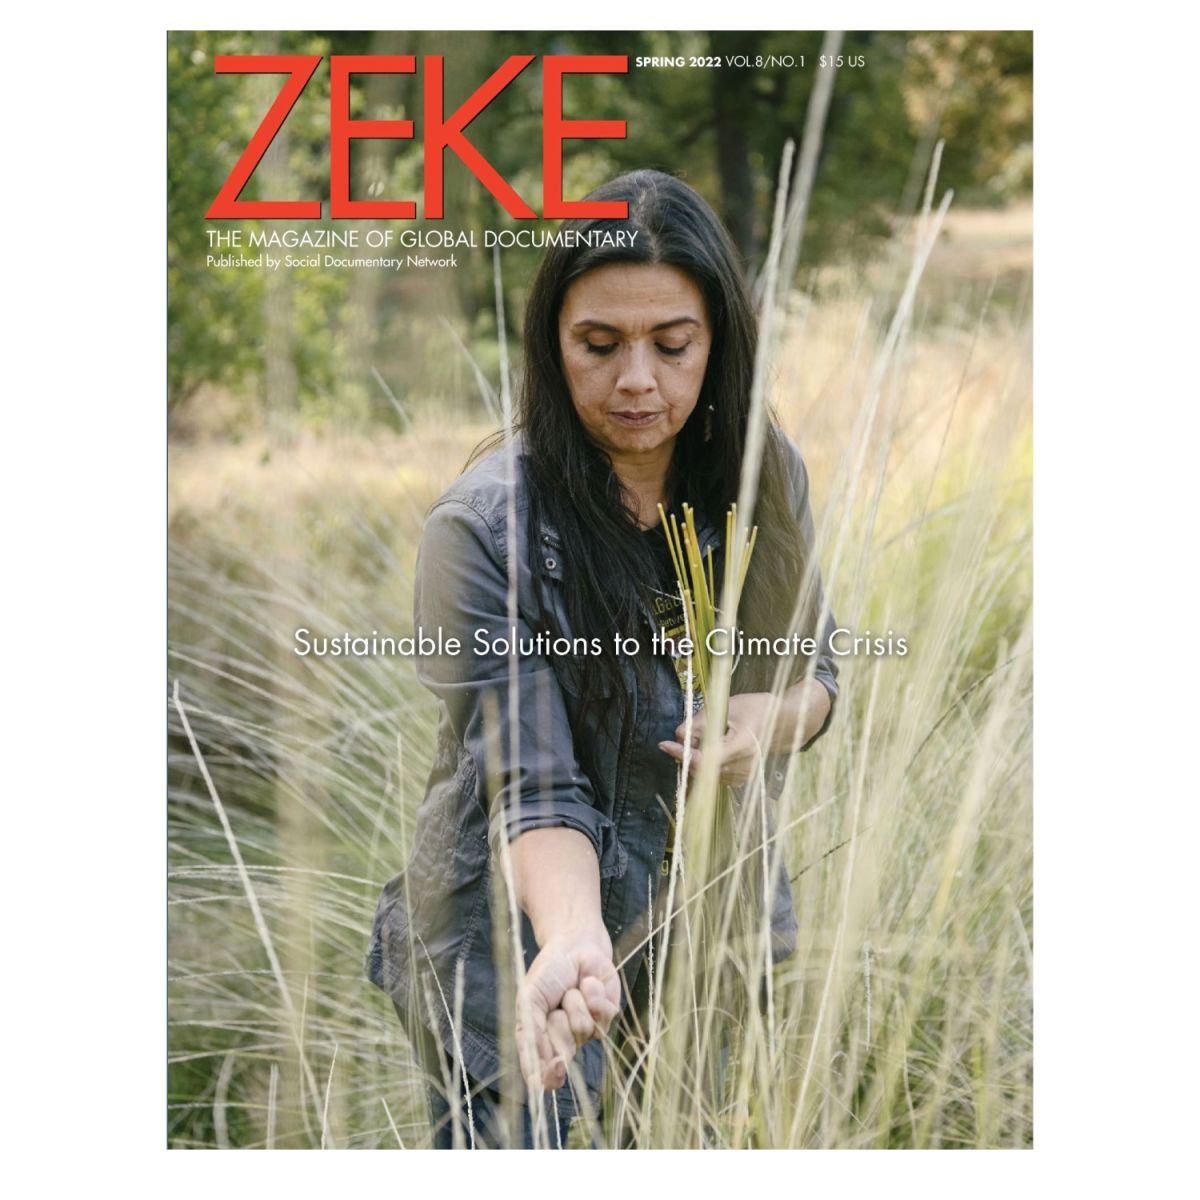 ZEKE The magazine of global documentary - Printemps 2022 Vol.8 No.1